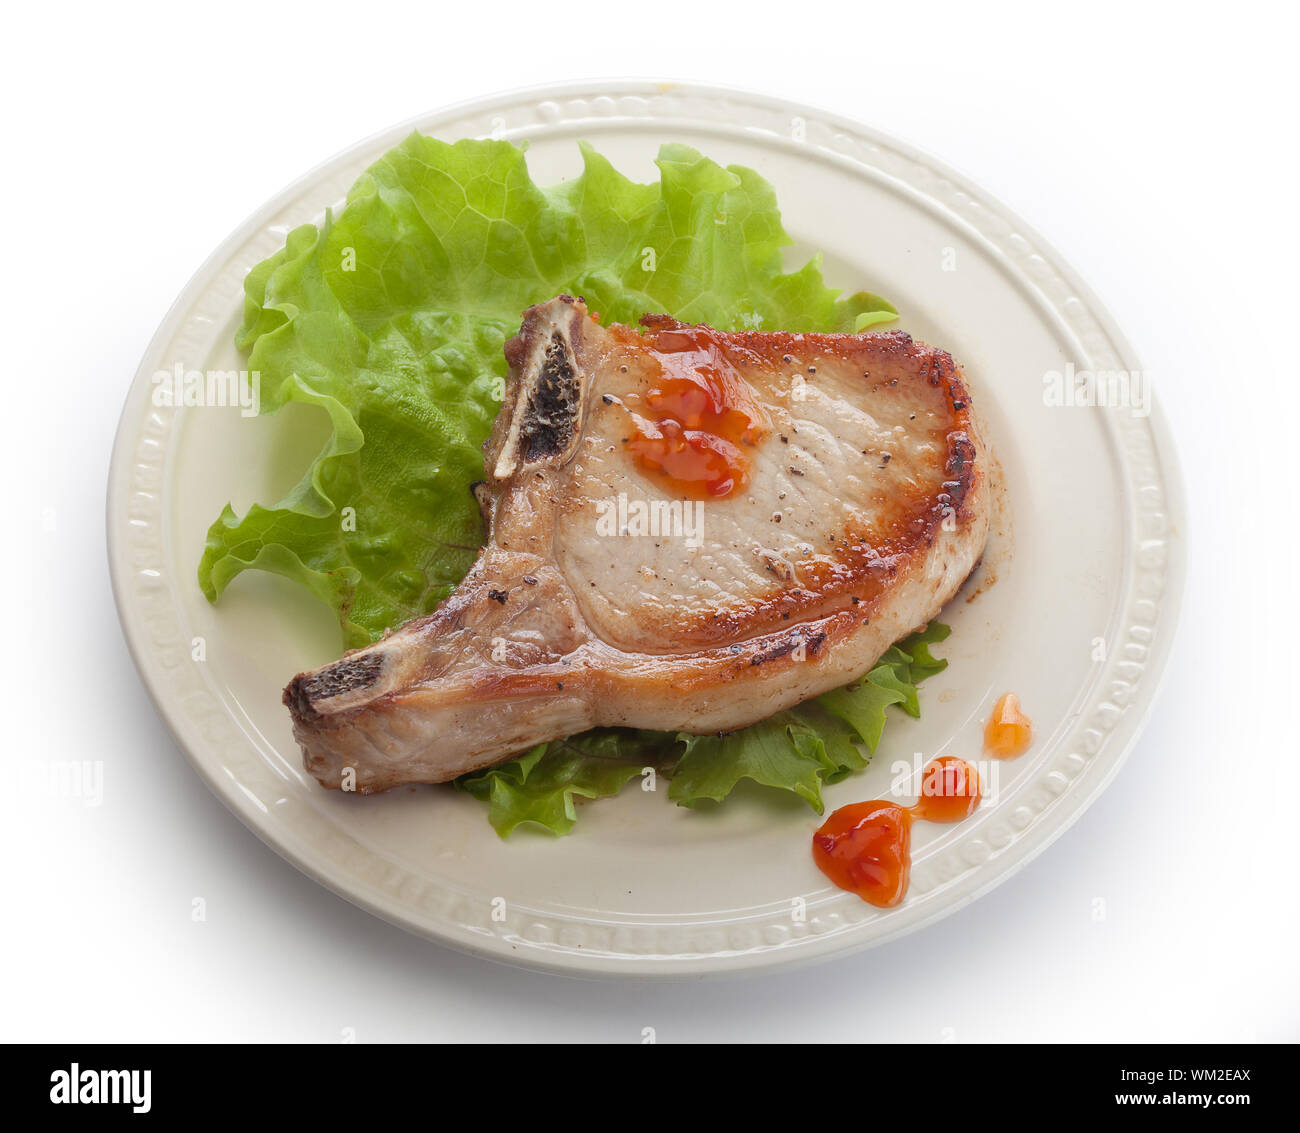 Fried pork cutlet Stock Photo - Alamy